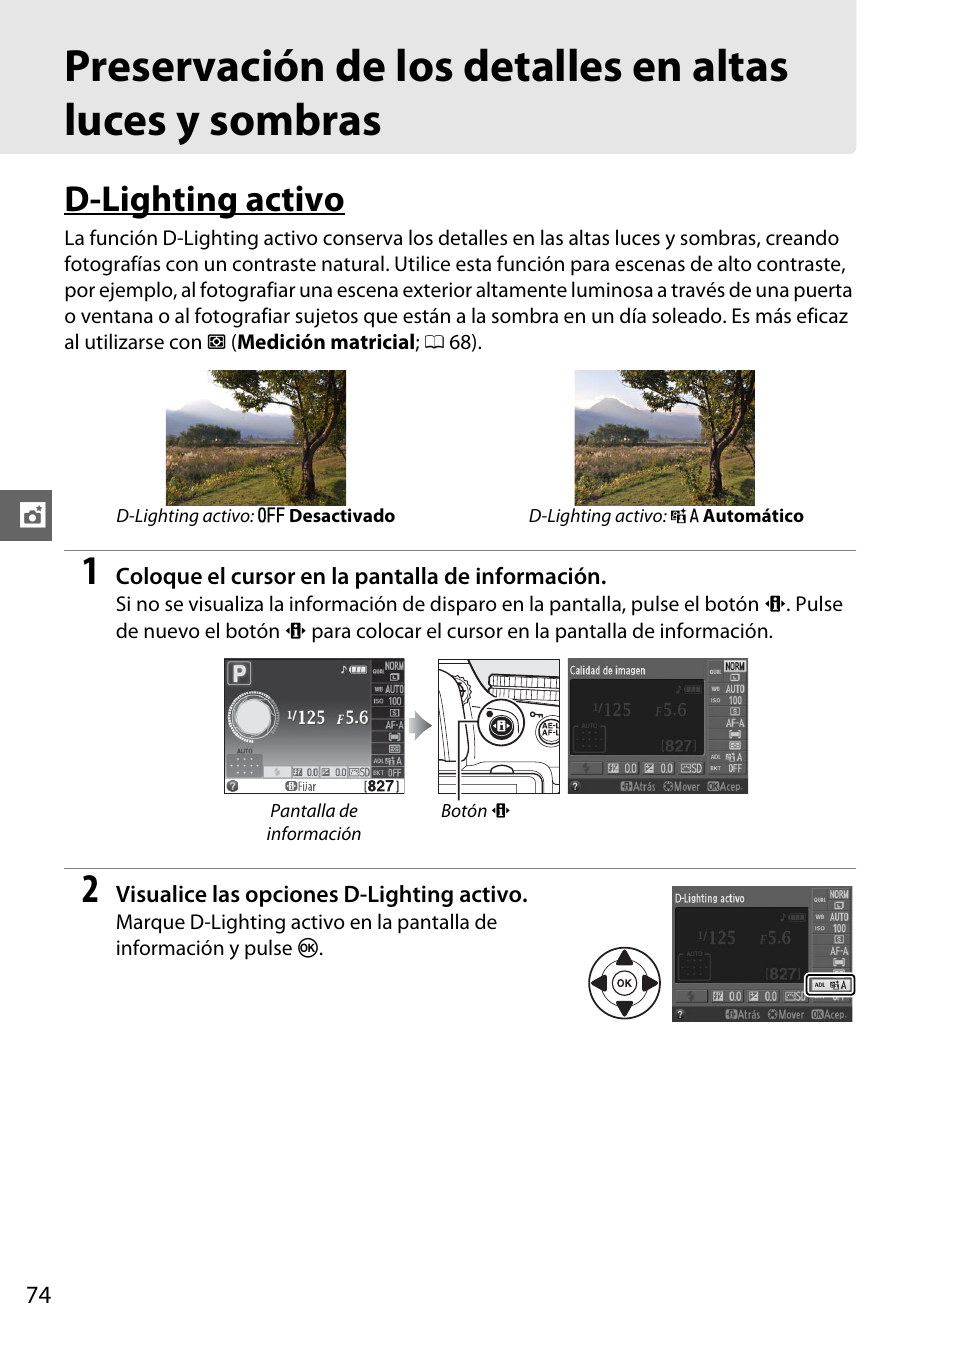 D-lighting activo | Nikon D5100 Manual del usuario | Página 92 / 260